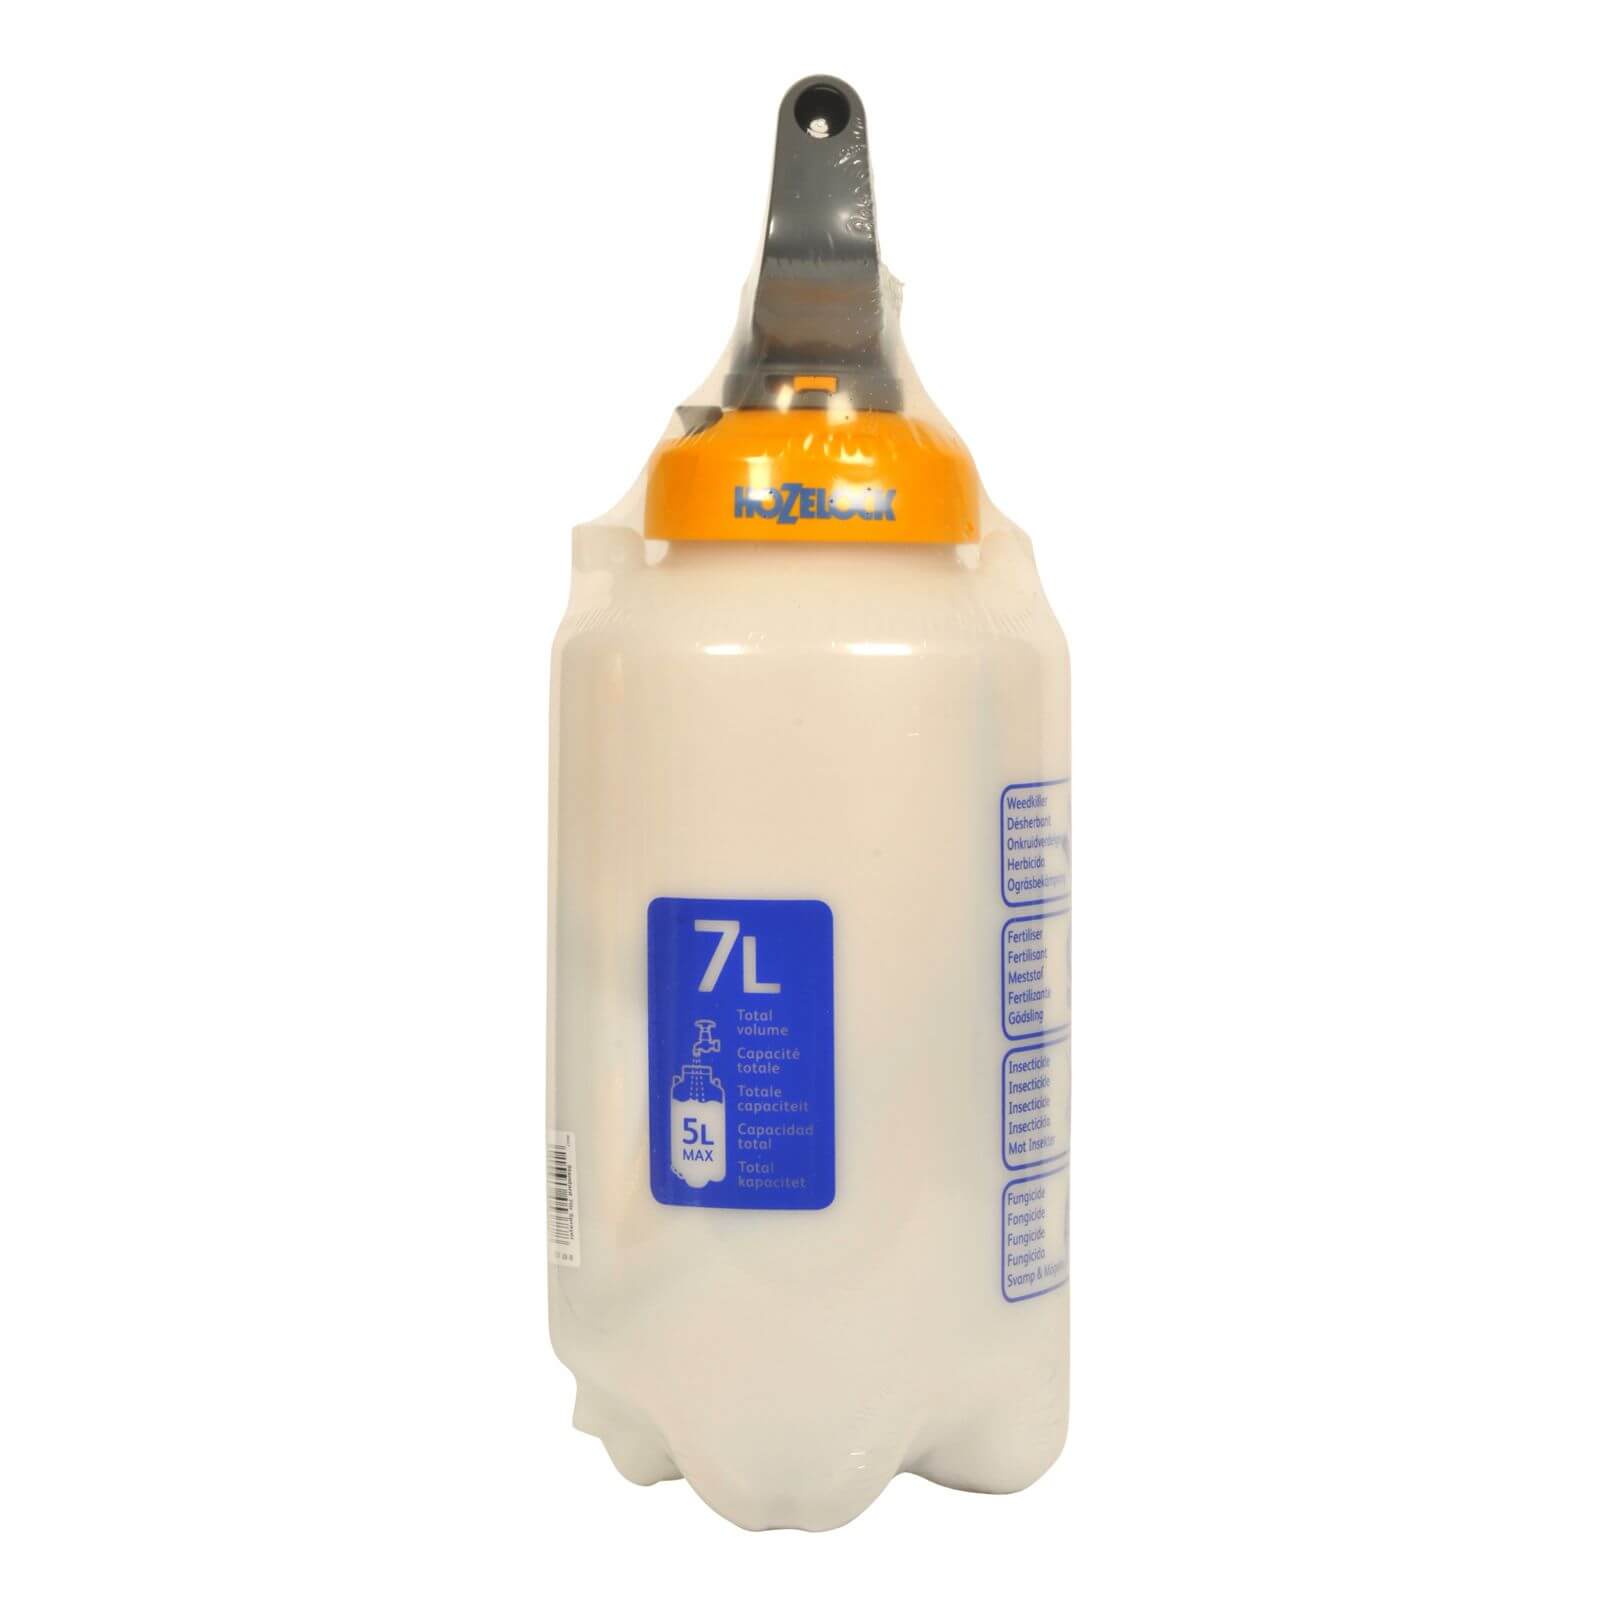 Hozelock Garden Pressure Sprayer - 7L